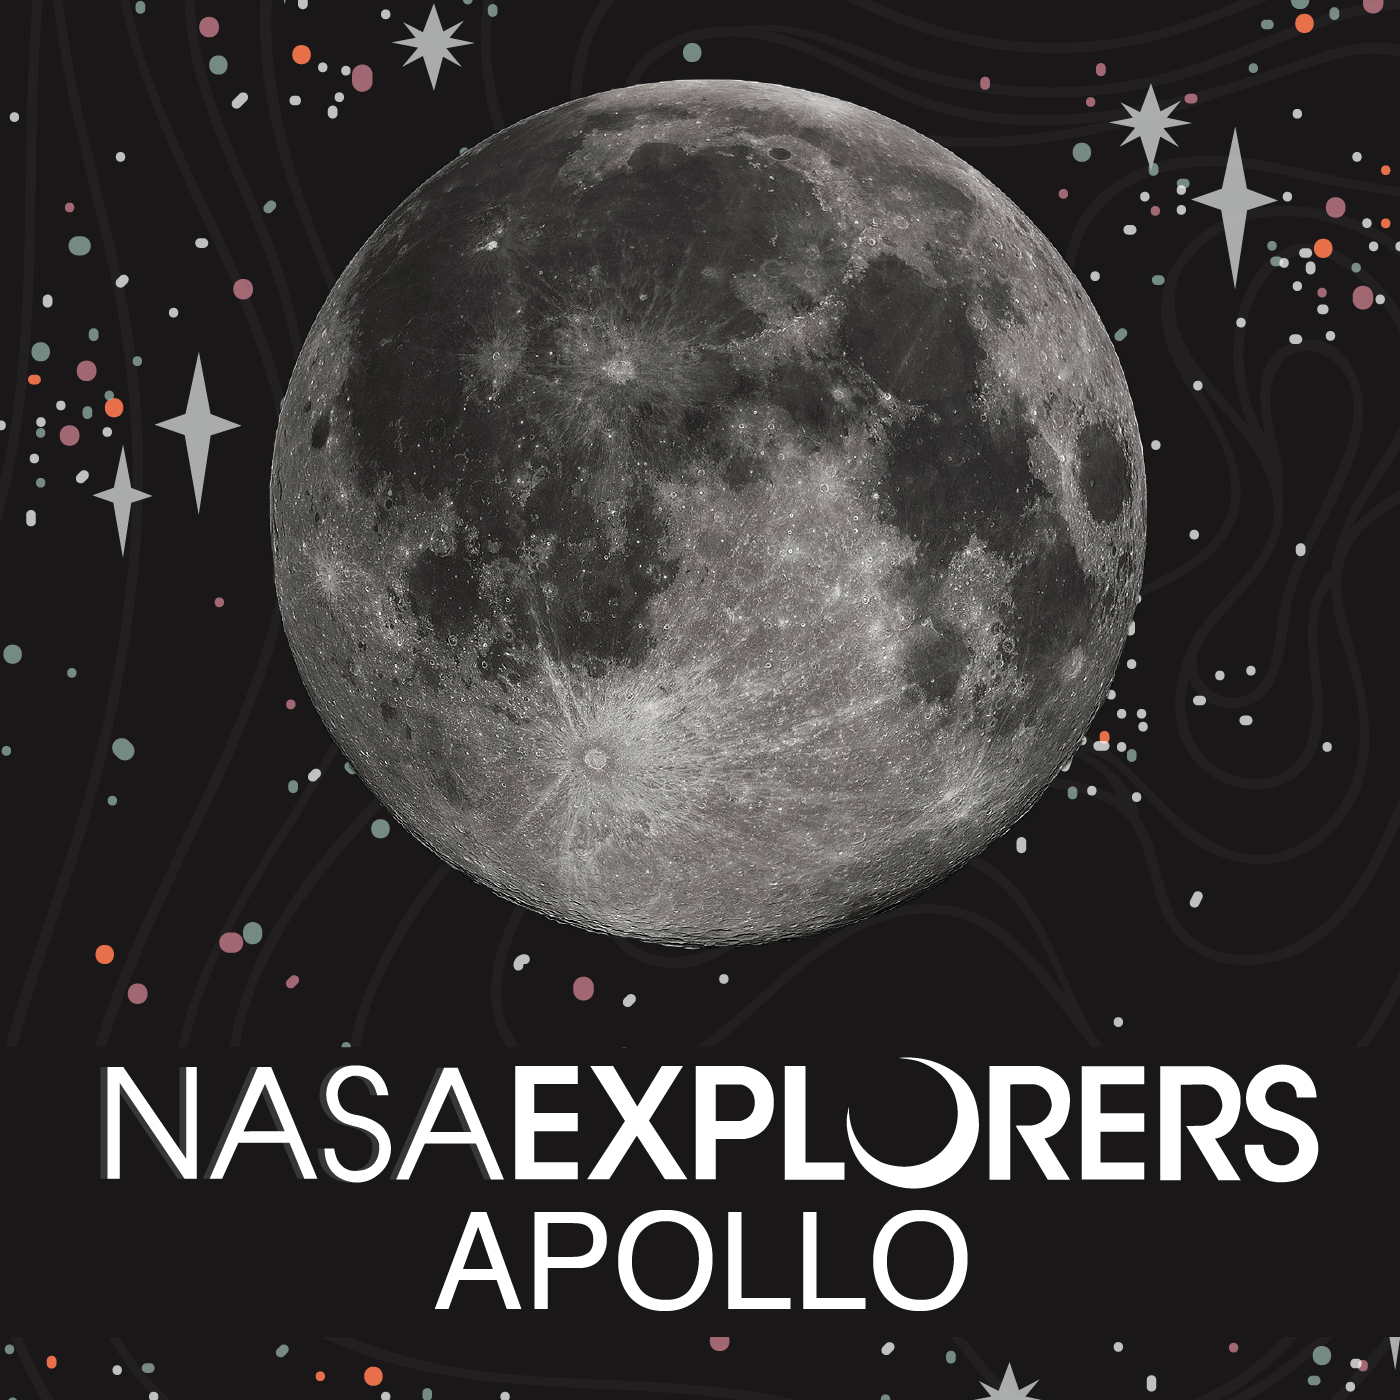 Image of Moon with NASA Explorers: Apollo text